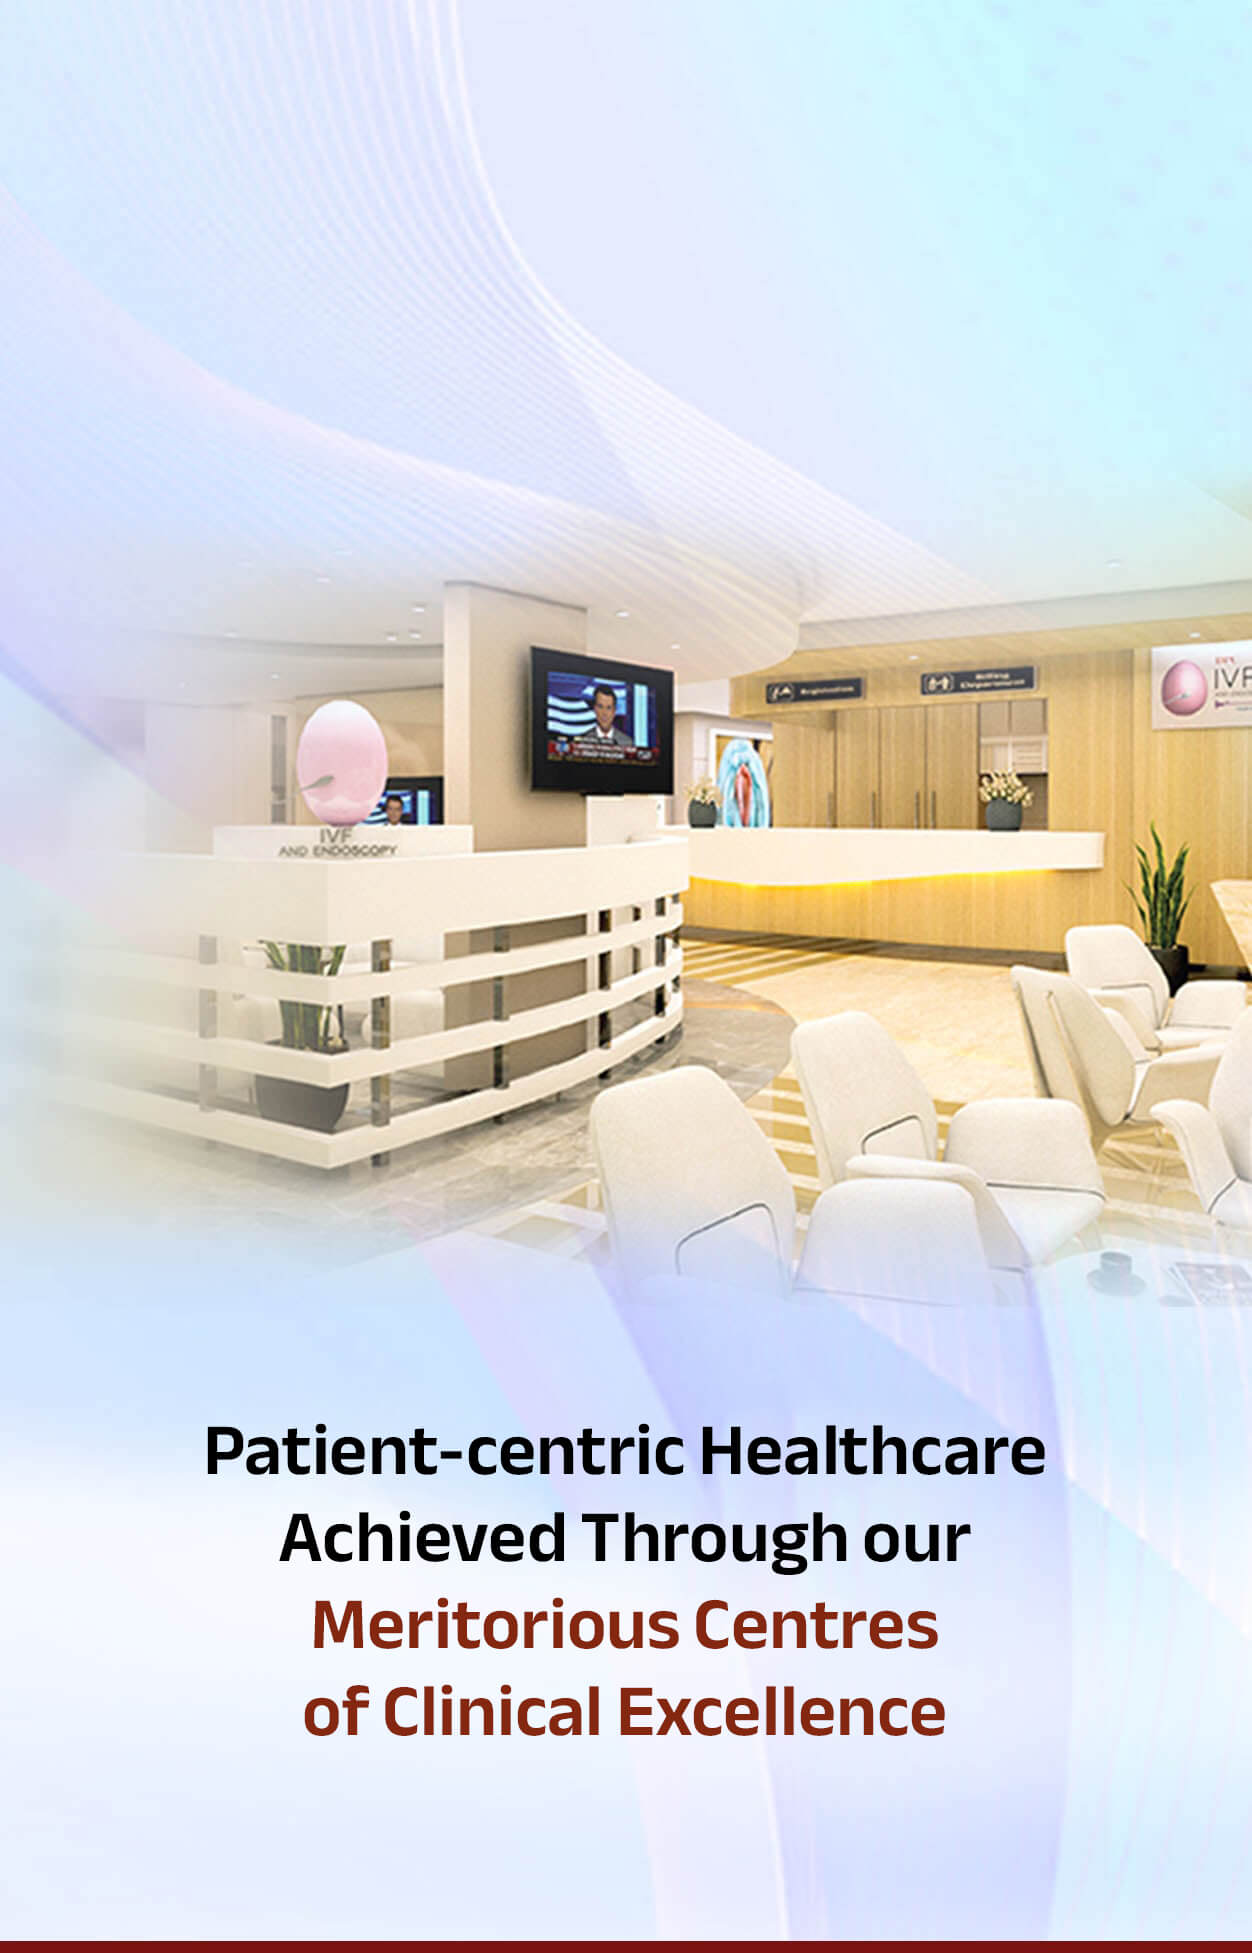 Patient-Centered Services - DPU Hospital